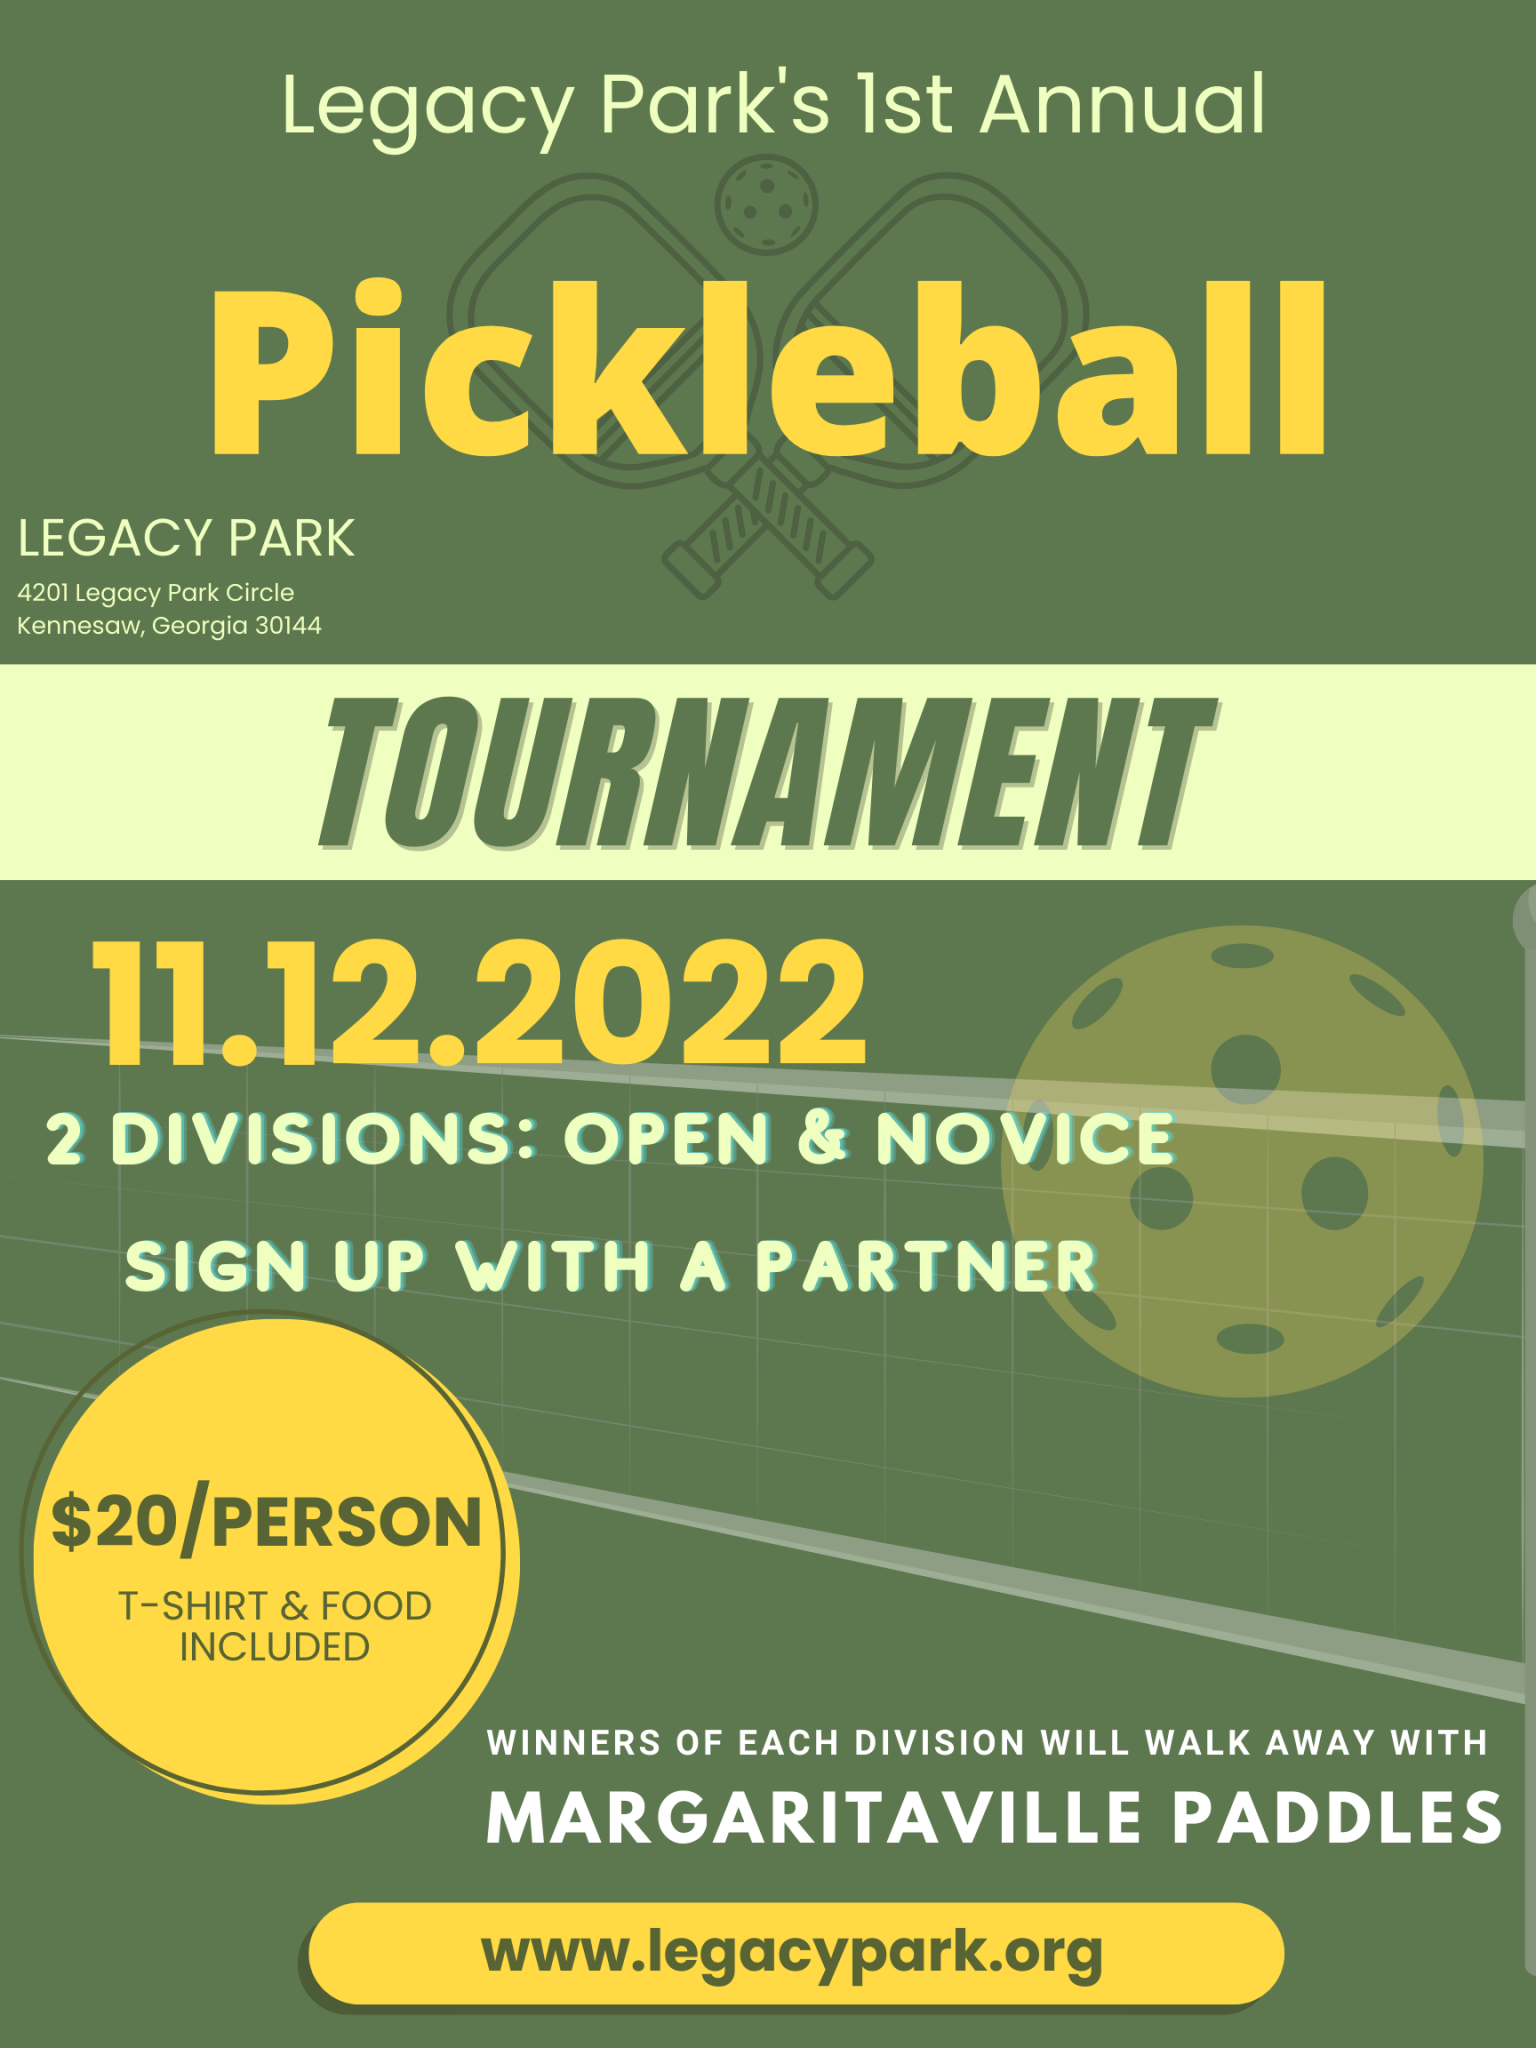 1st Annual Pickleball Tournament Legacy Park